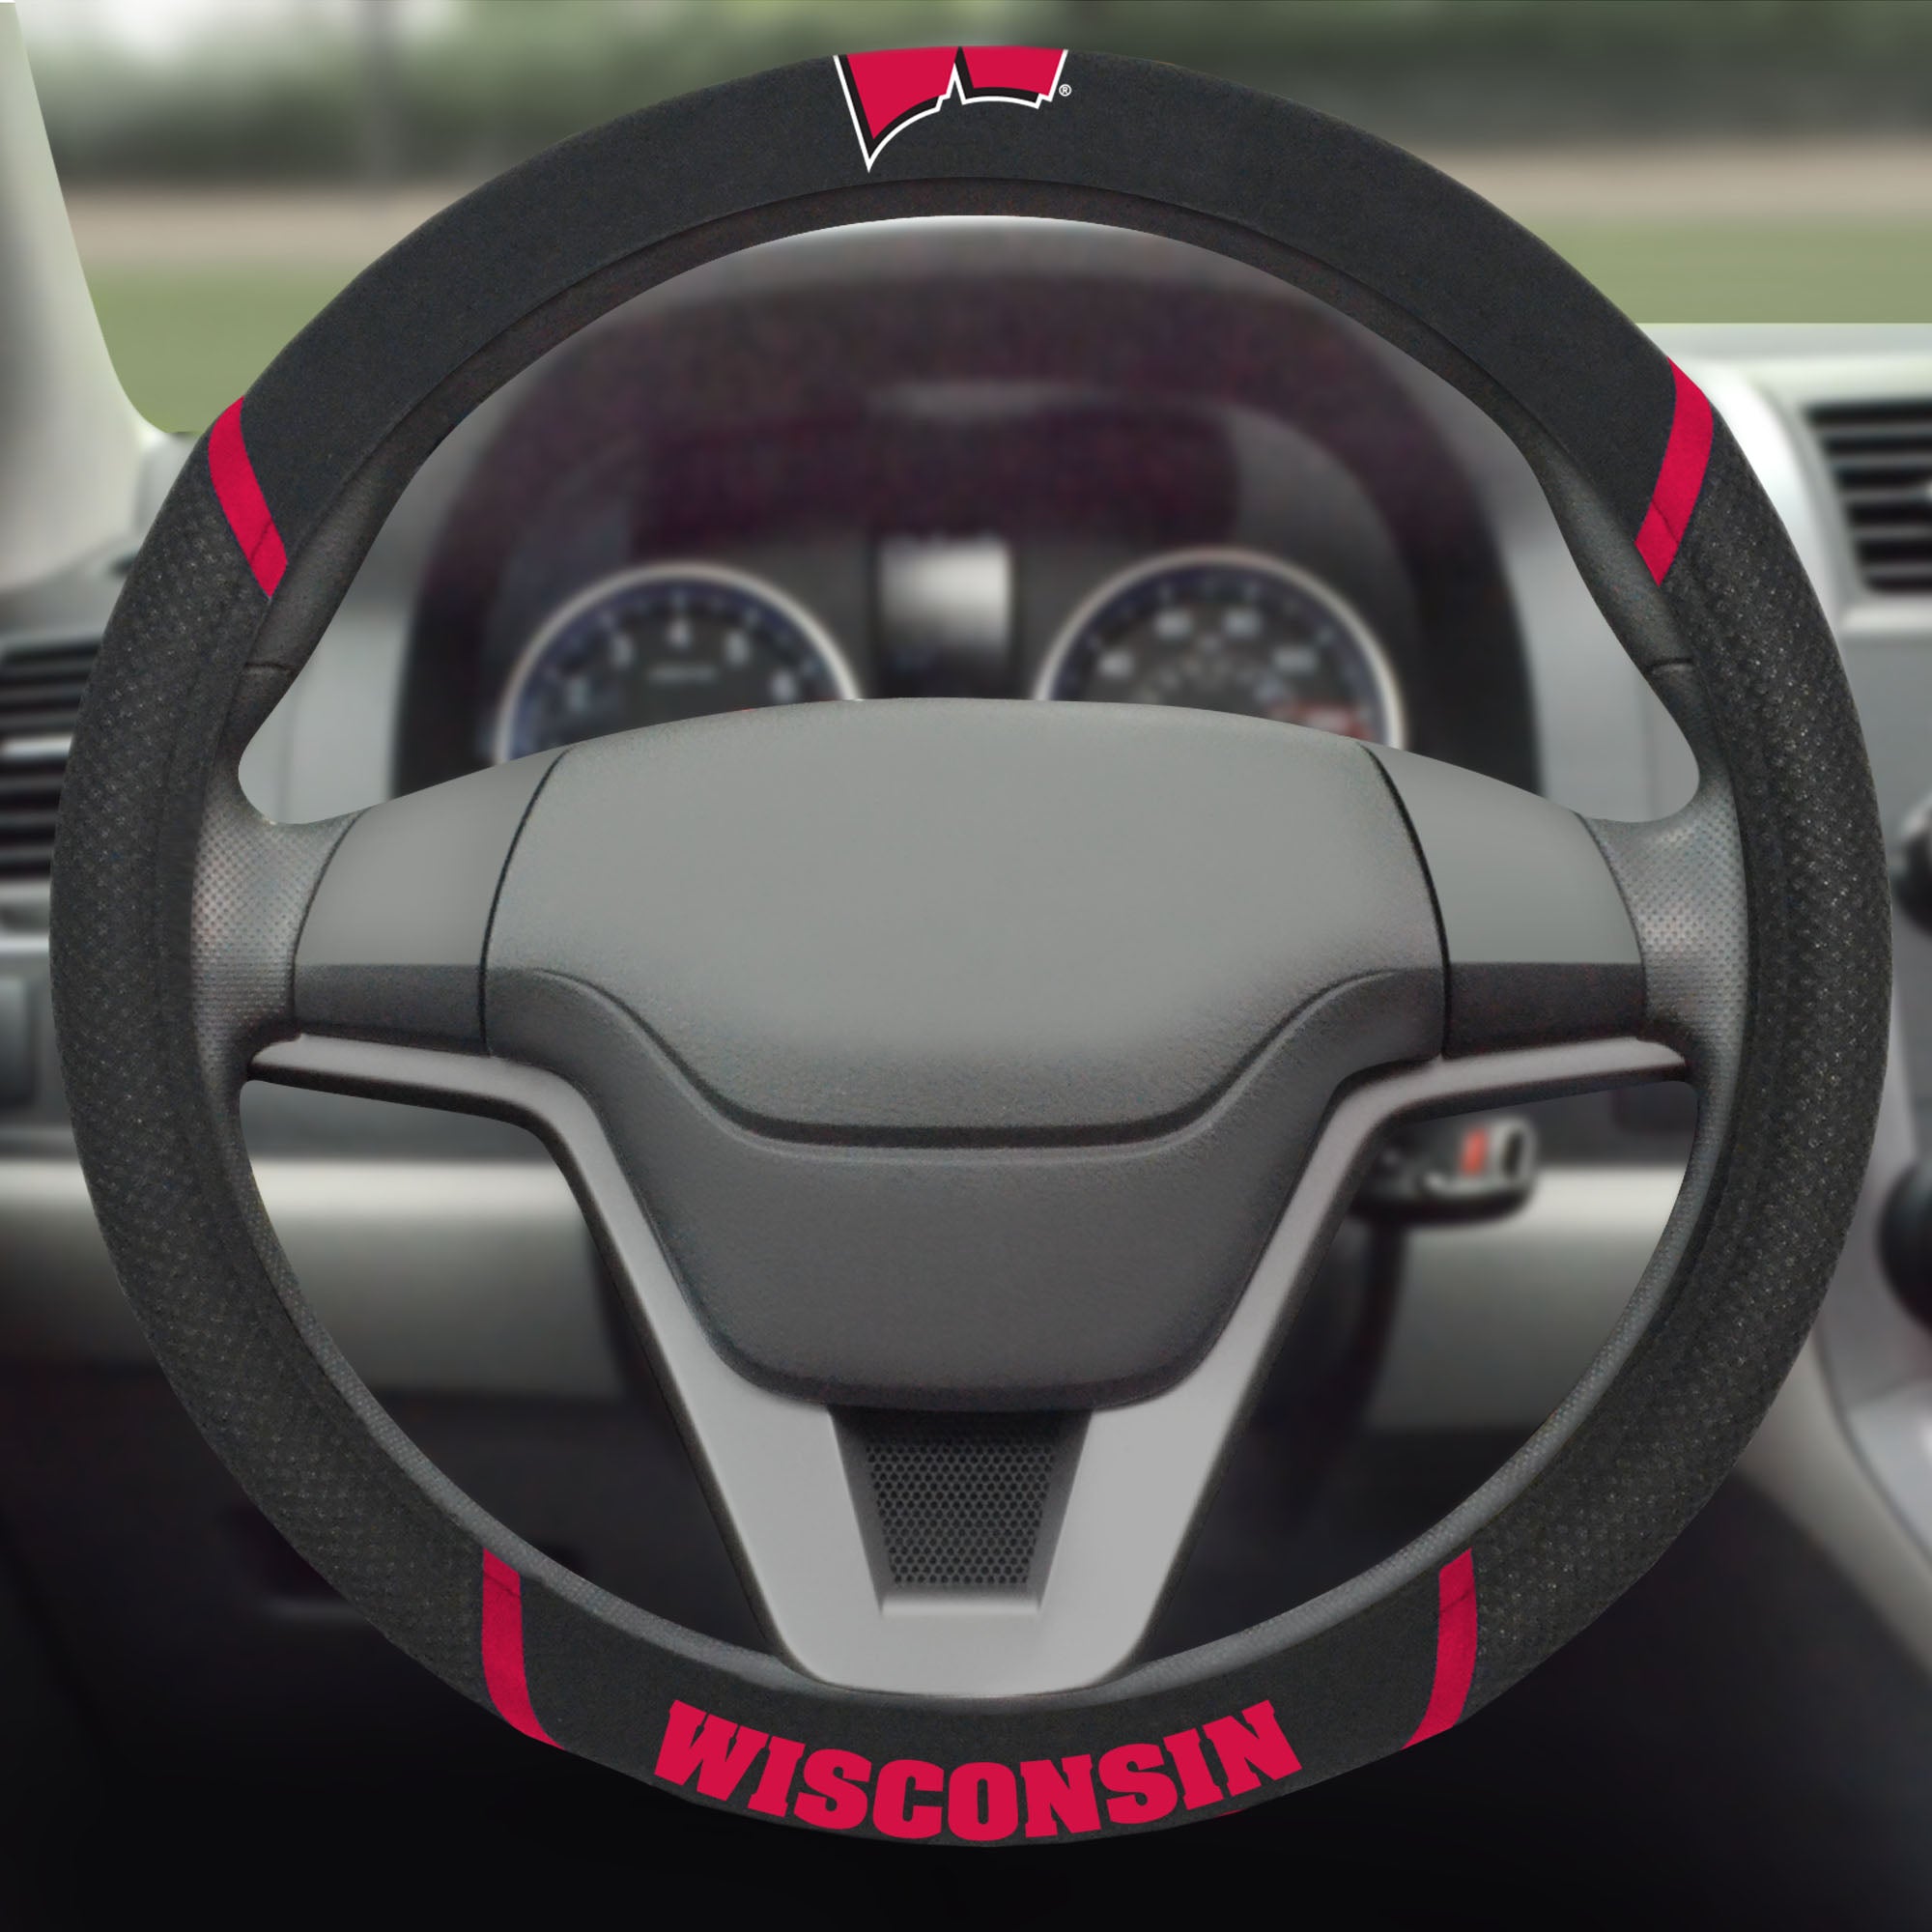 University of Wisconsin Steering Wheel Cover 15